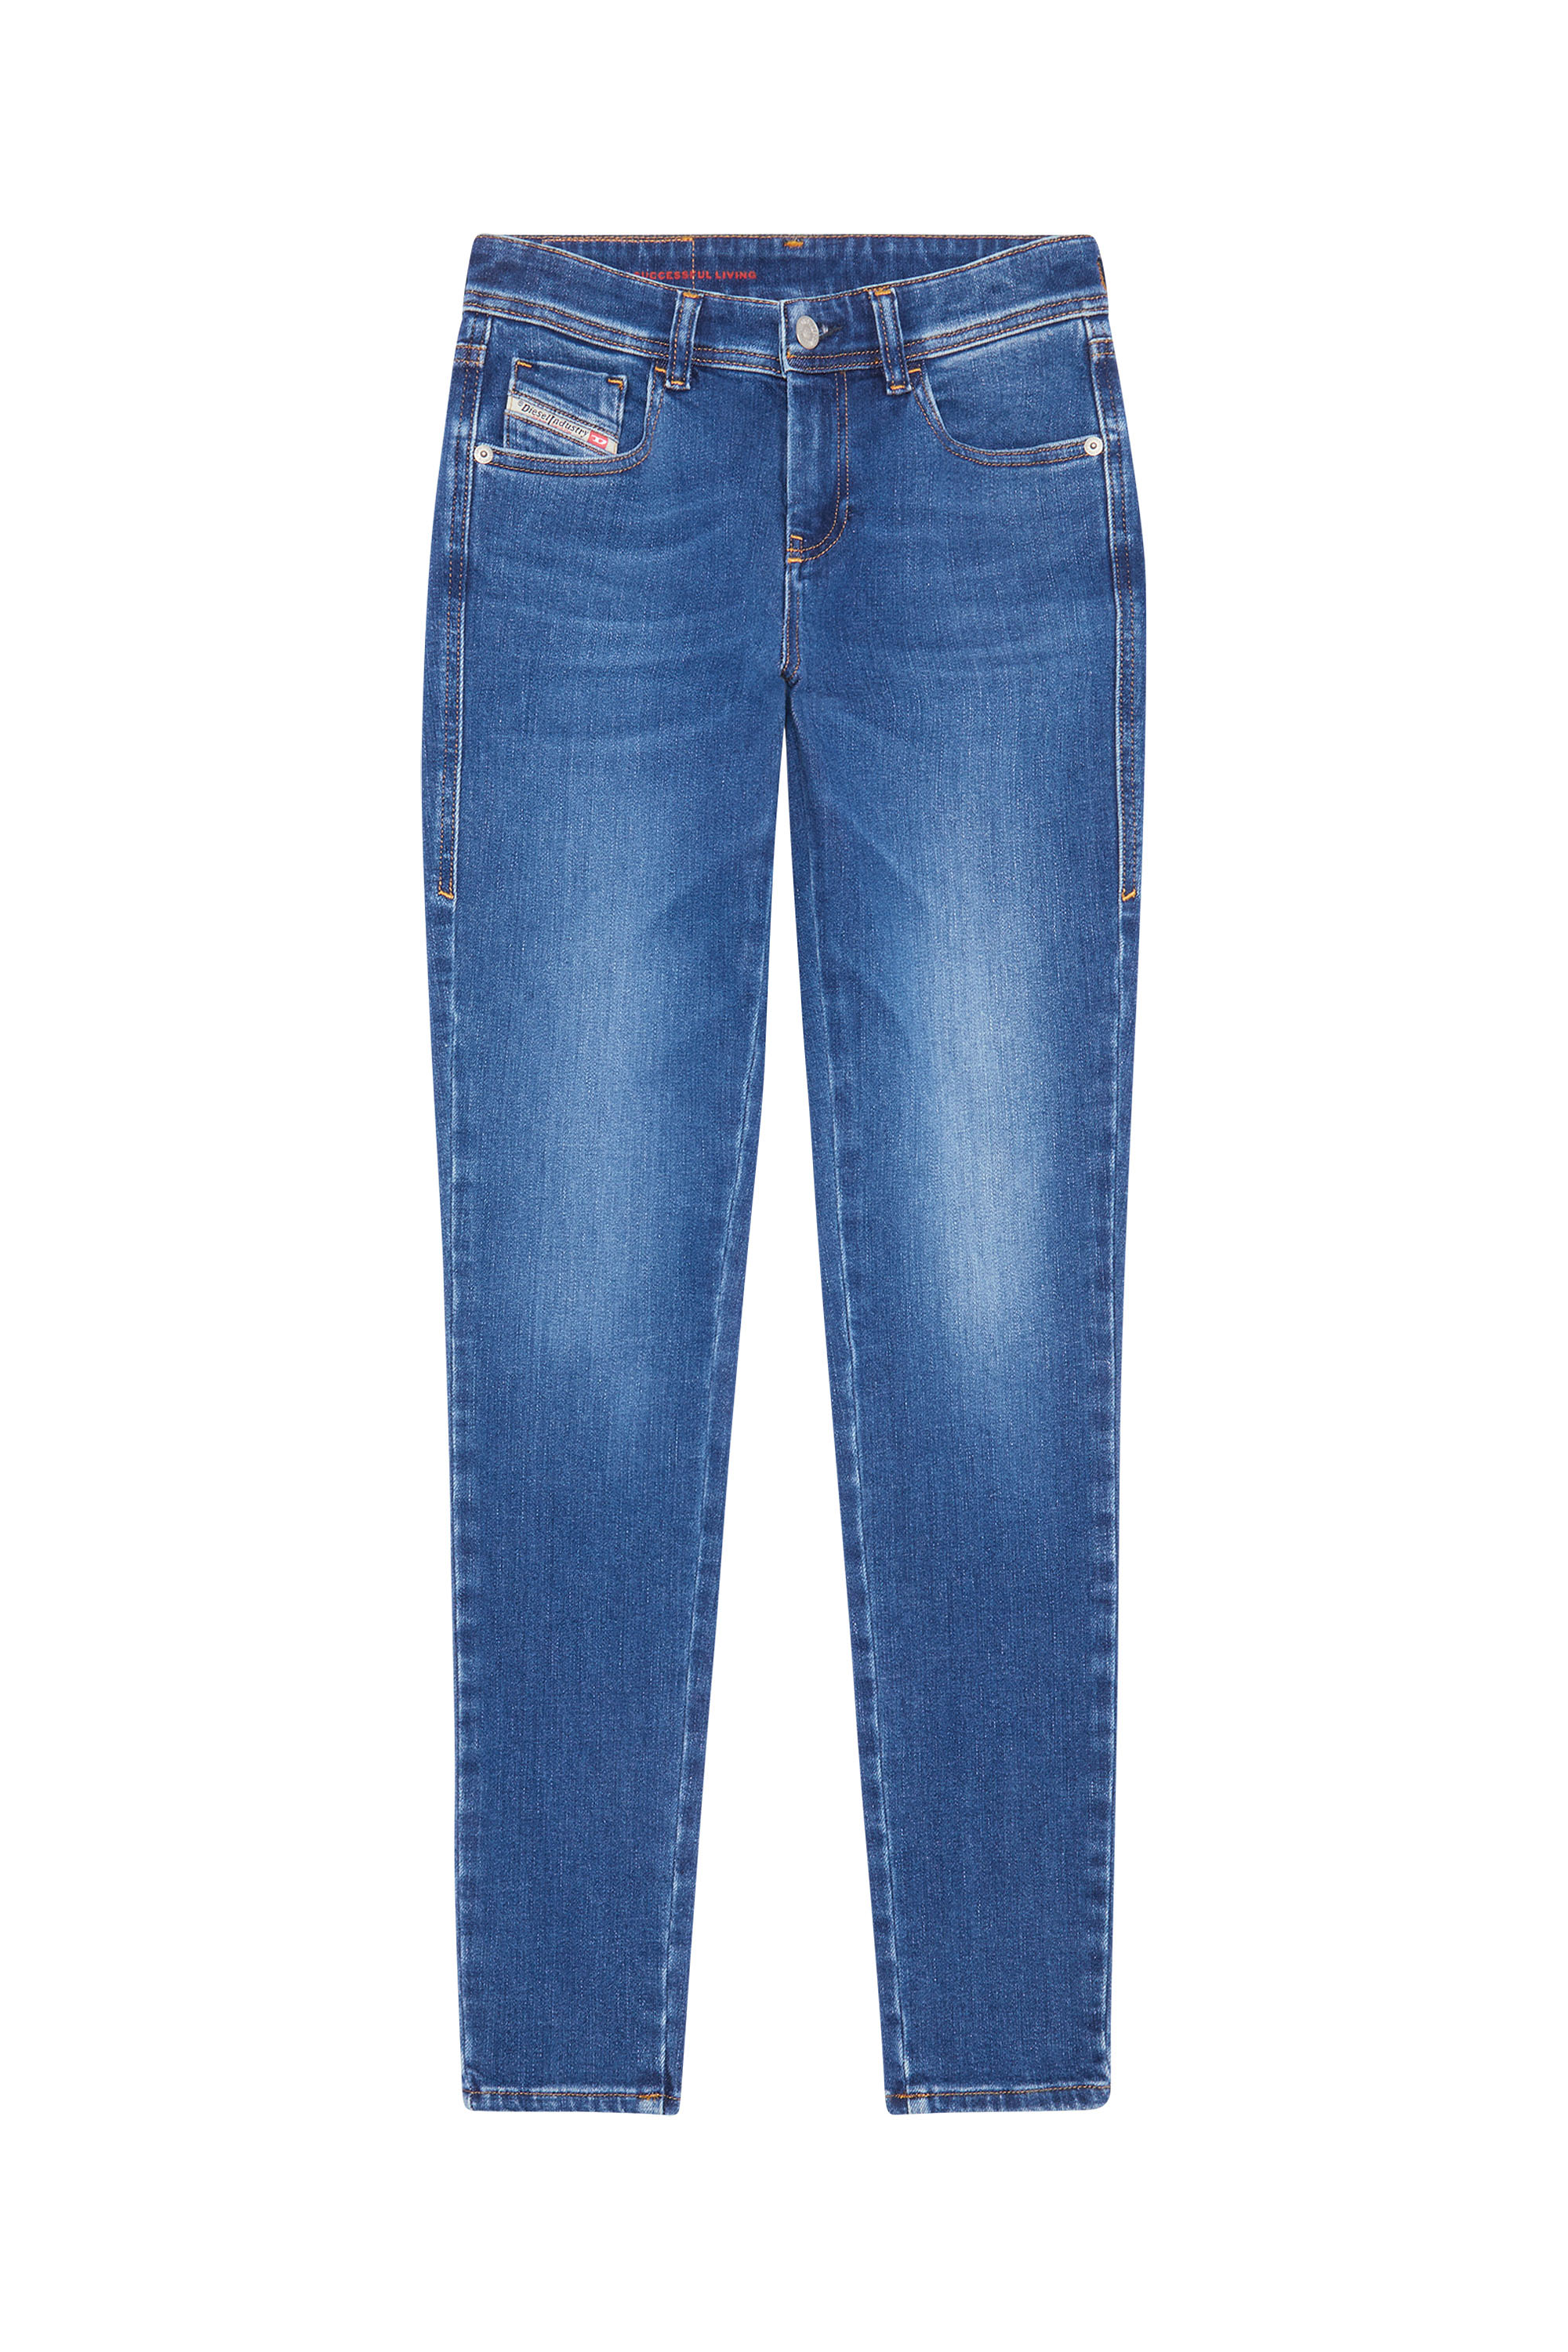 Super skinny Jeans 2017 Slandy 09C21, Bleu moyen - Jeans